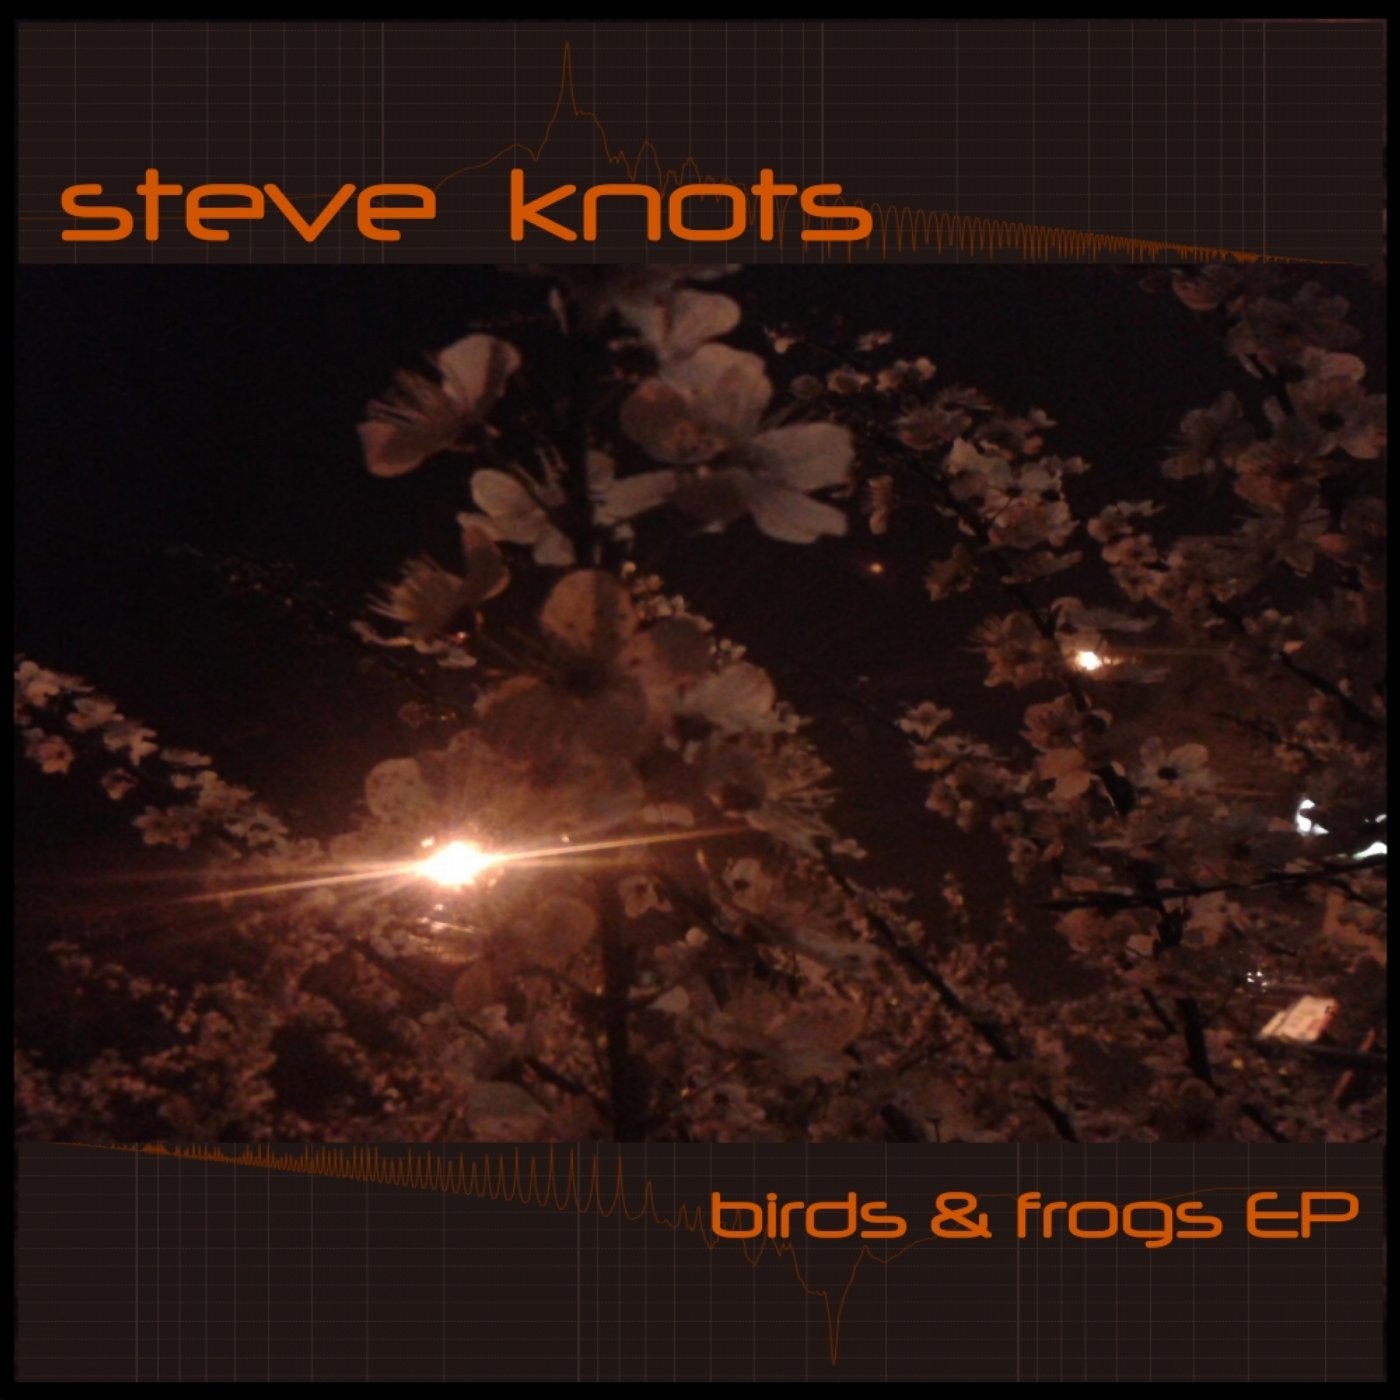 Birds & Frogs EP